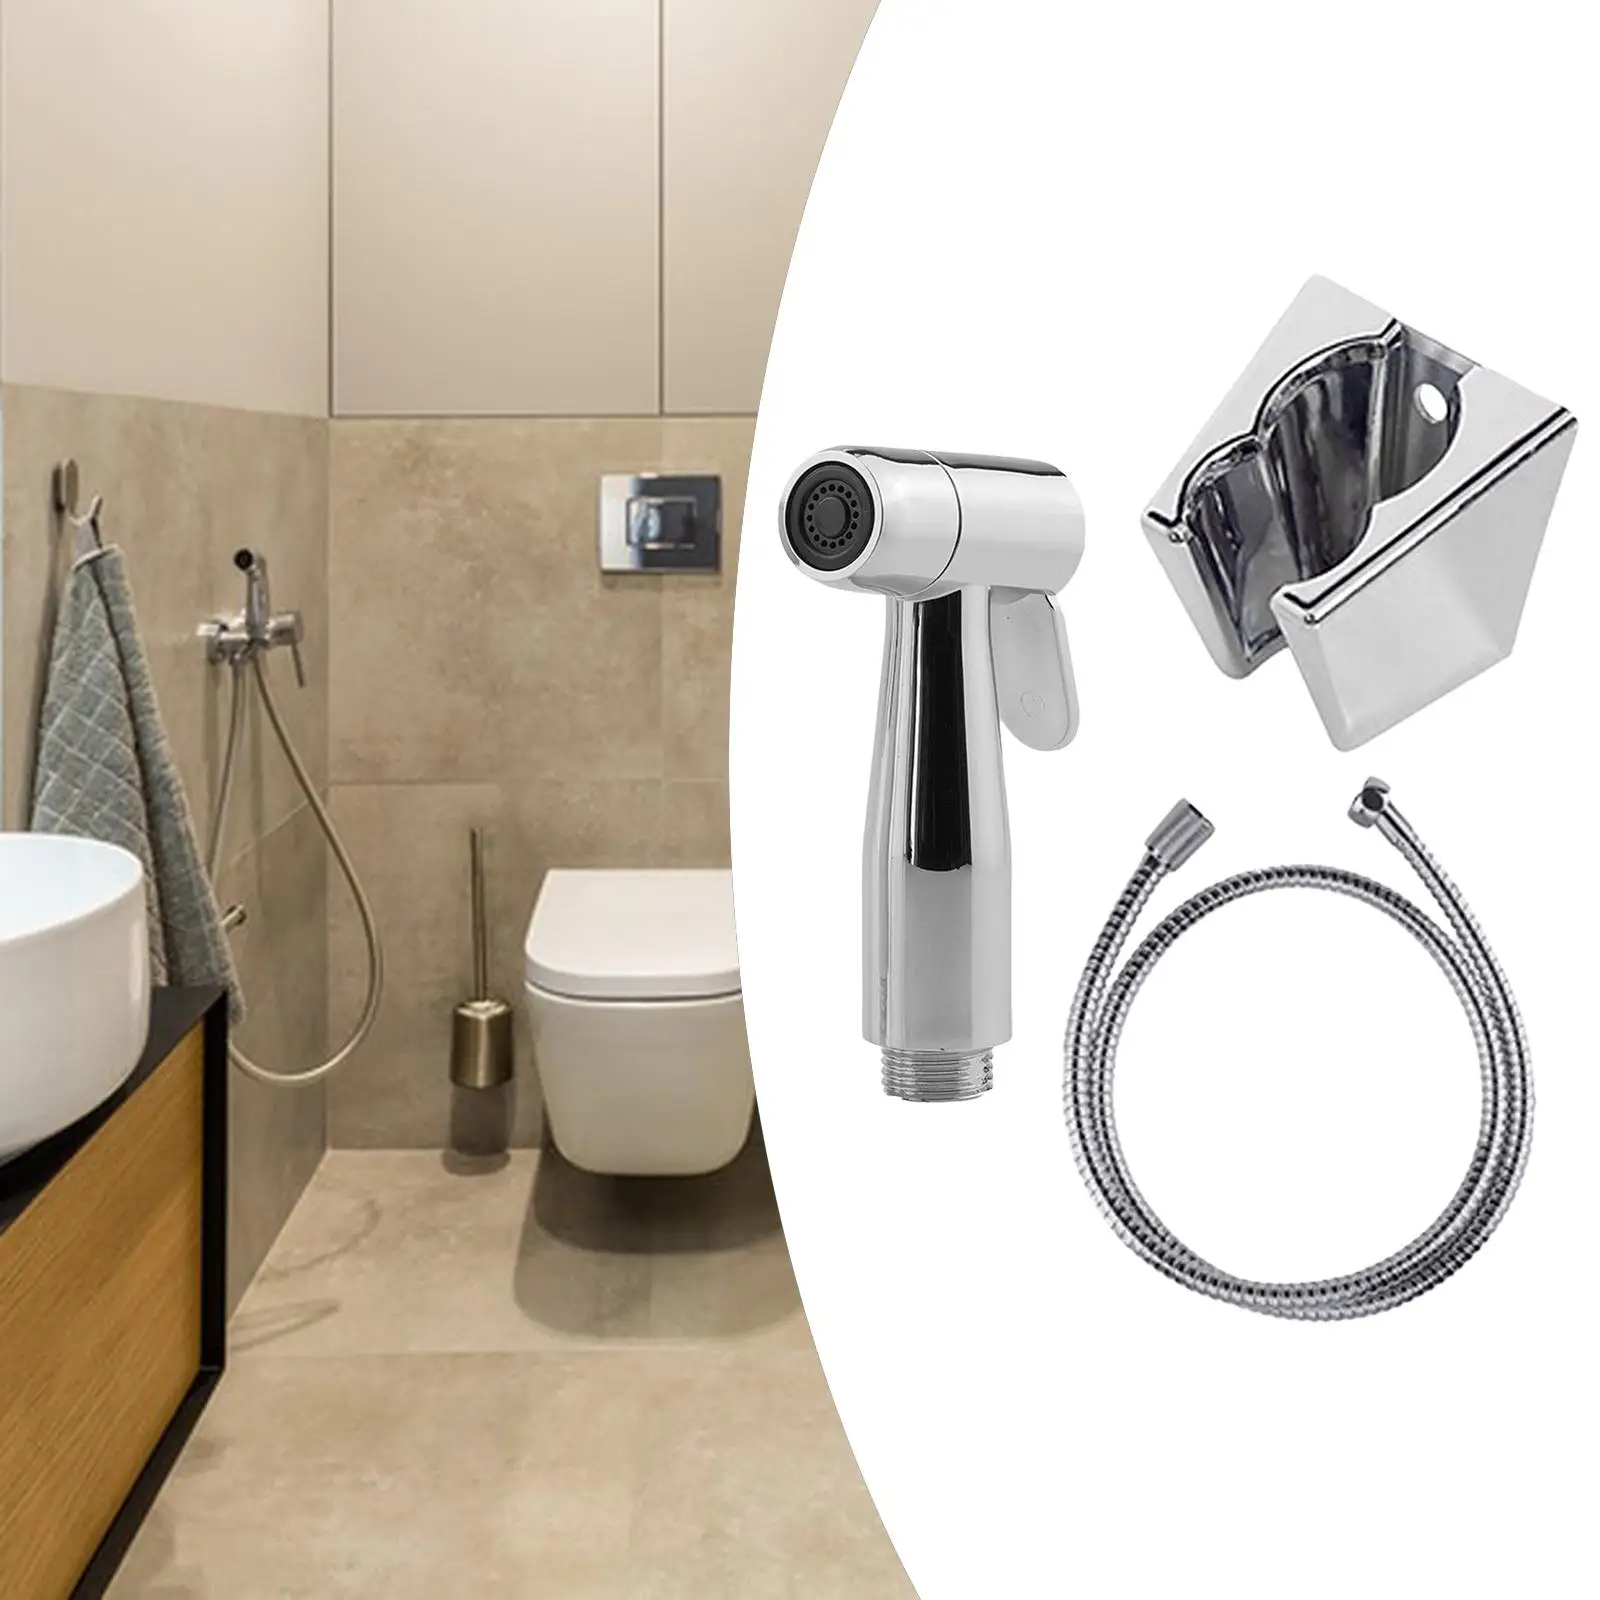 Bidet Toilet Sprayer Set Portable Pet Shower Toilet Water Sprayer with Hose and Wall Bracket Holder for Washroom Floor Cleaning